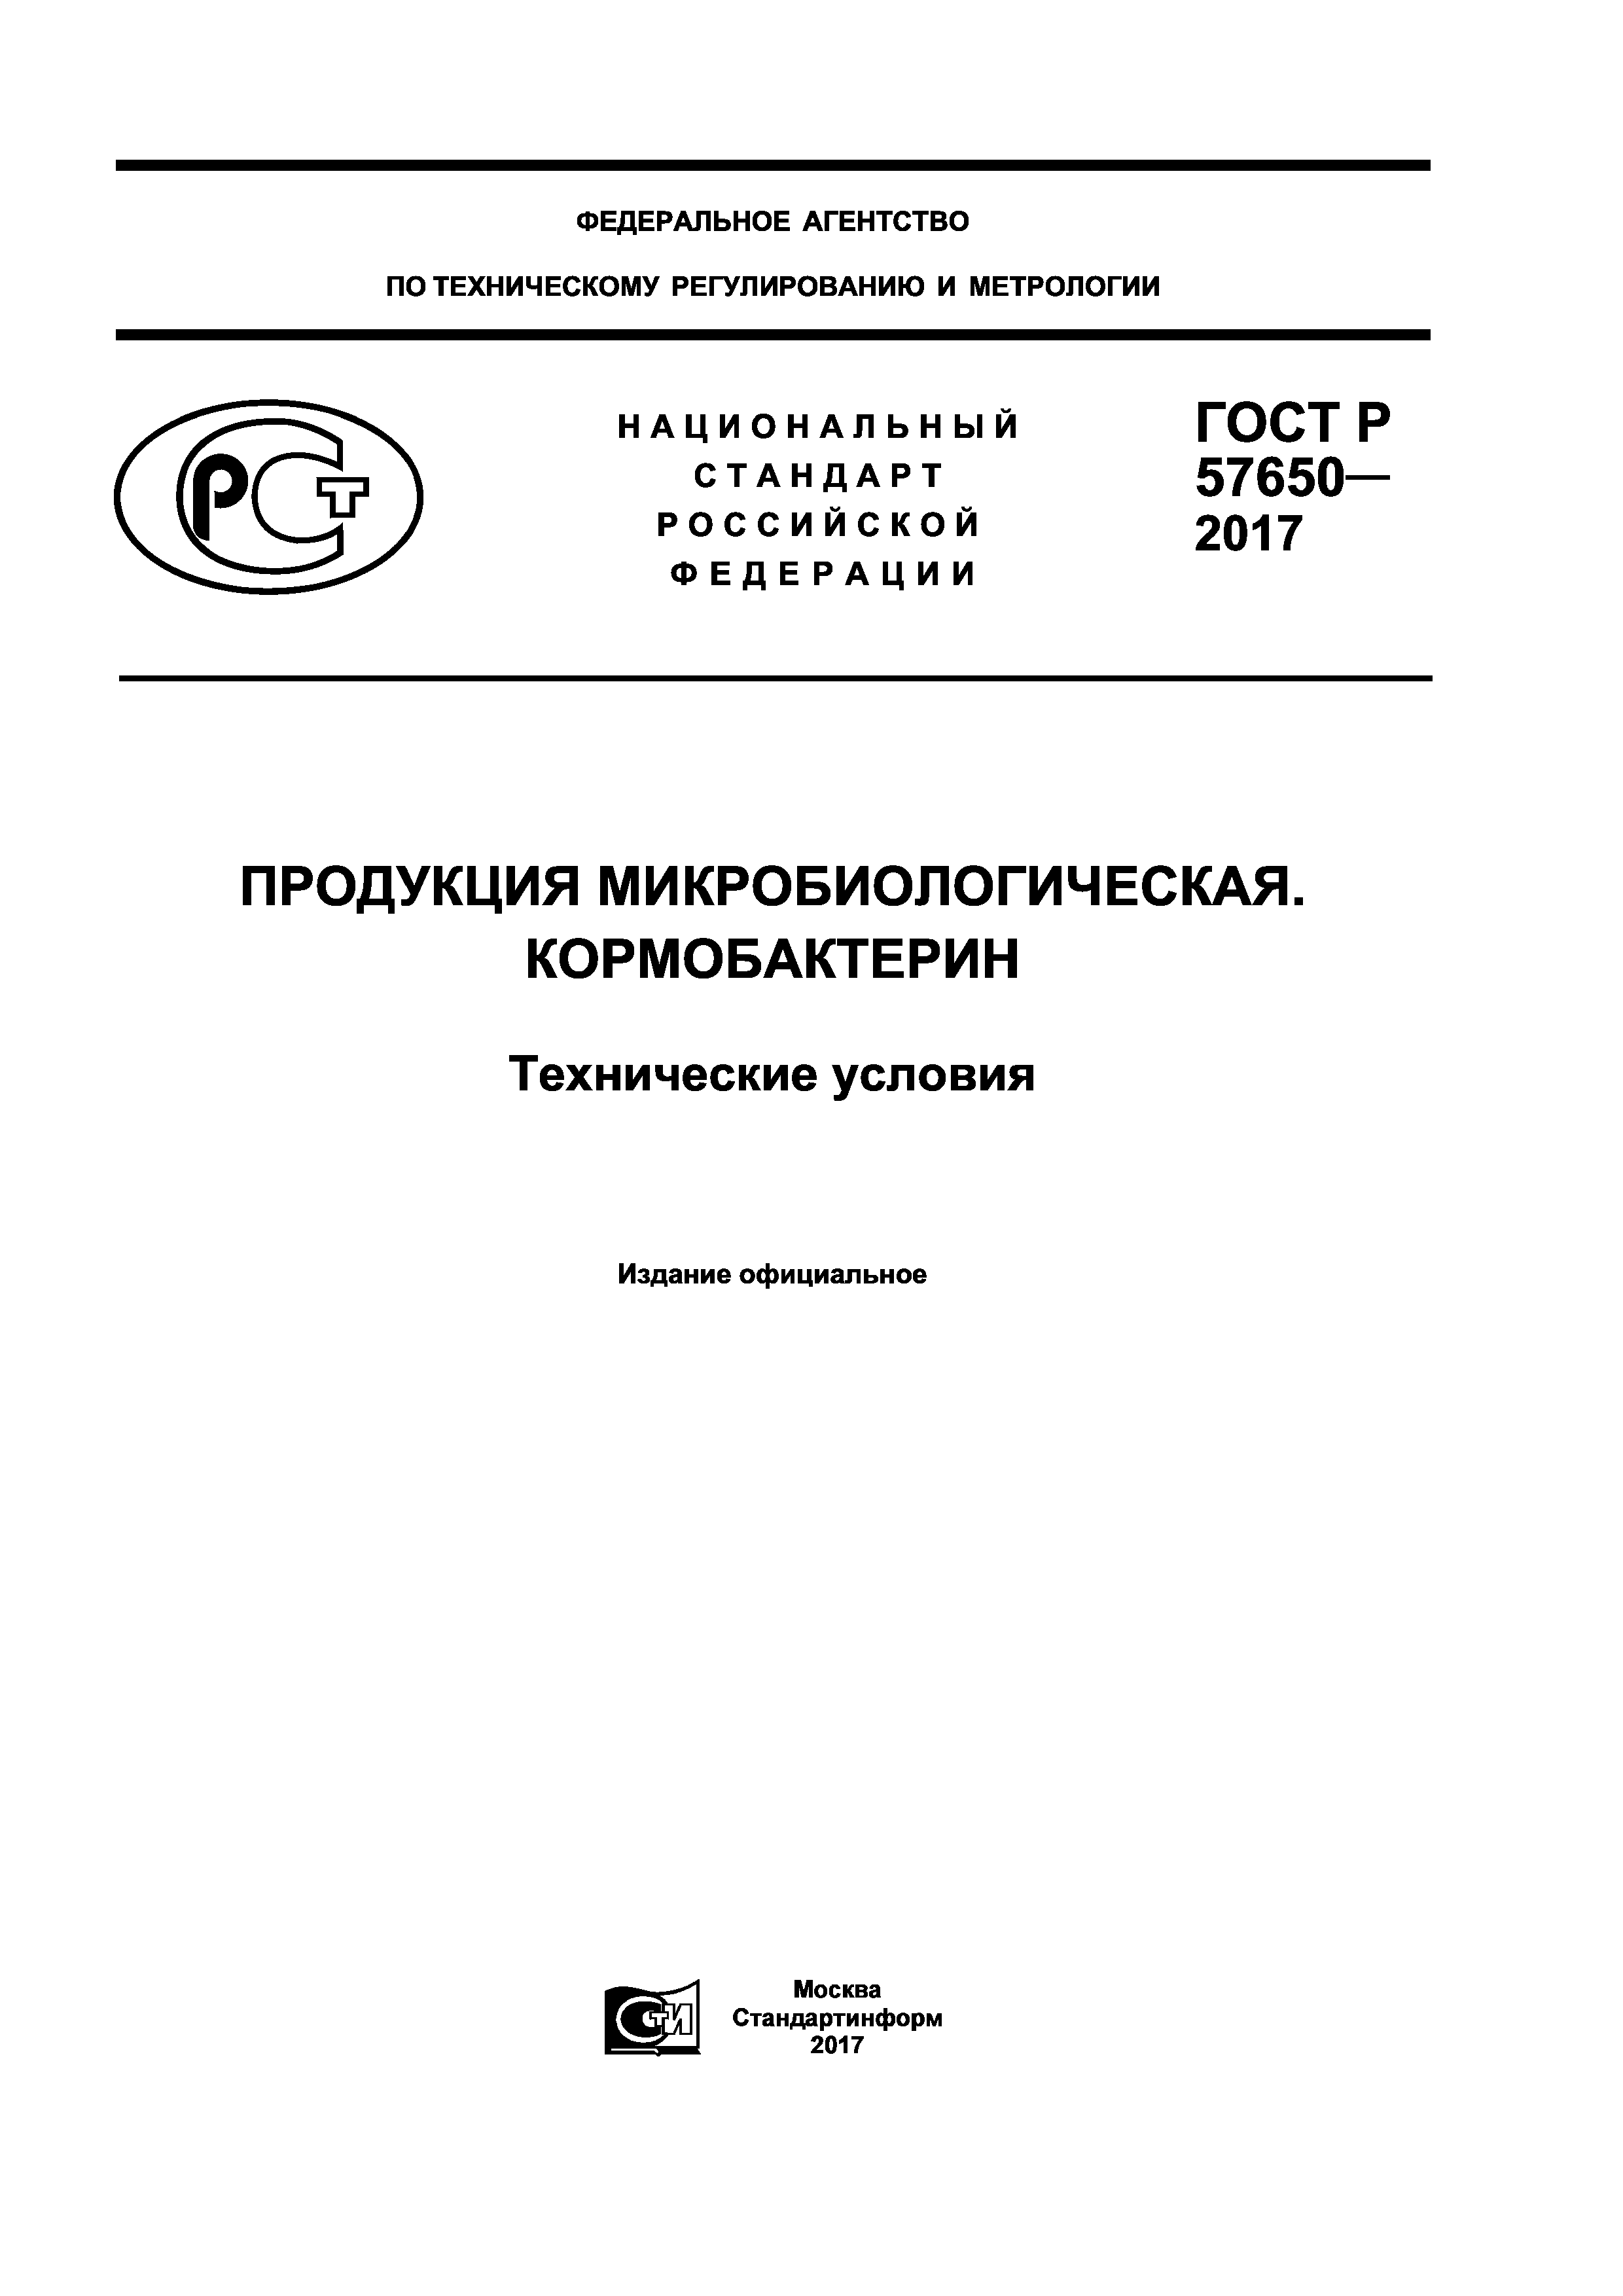 ГОСТ Р 57650-2017